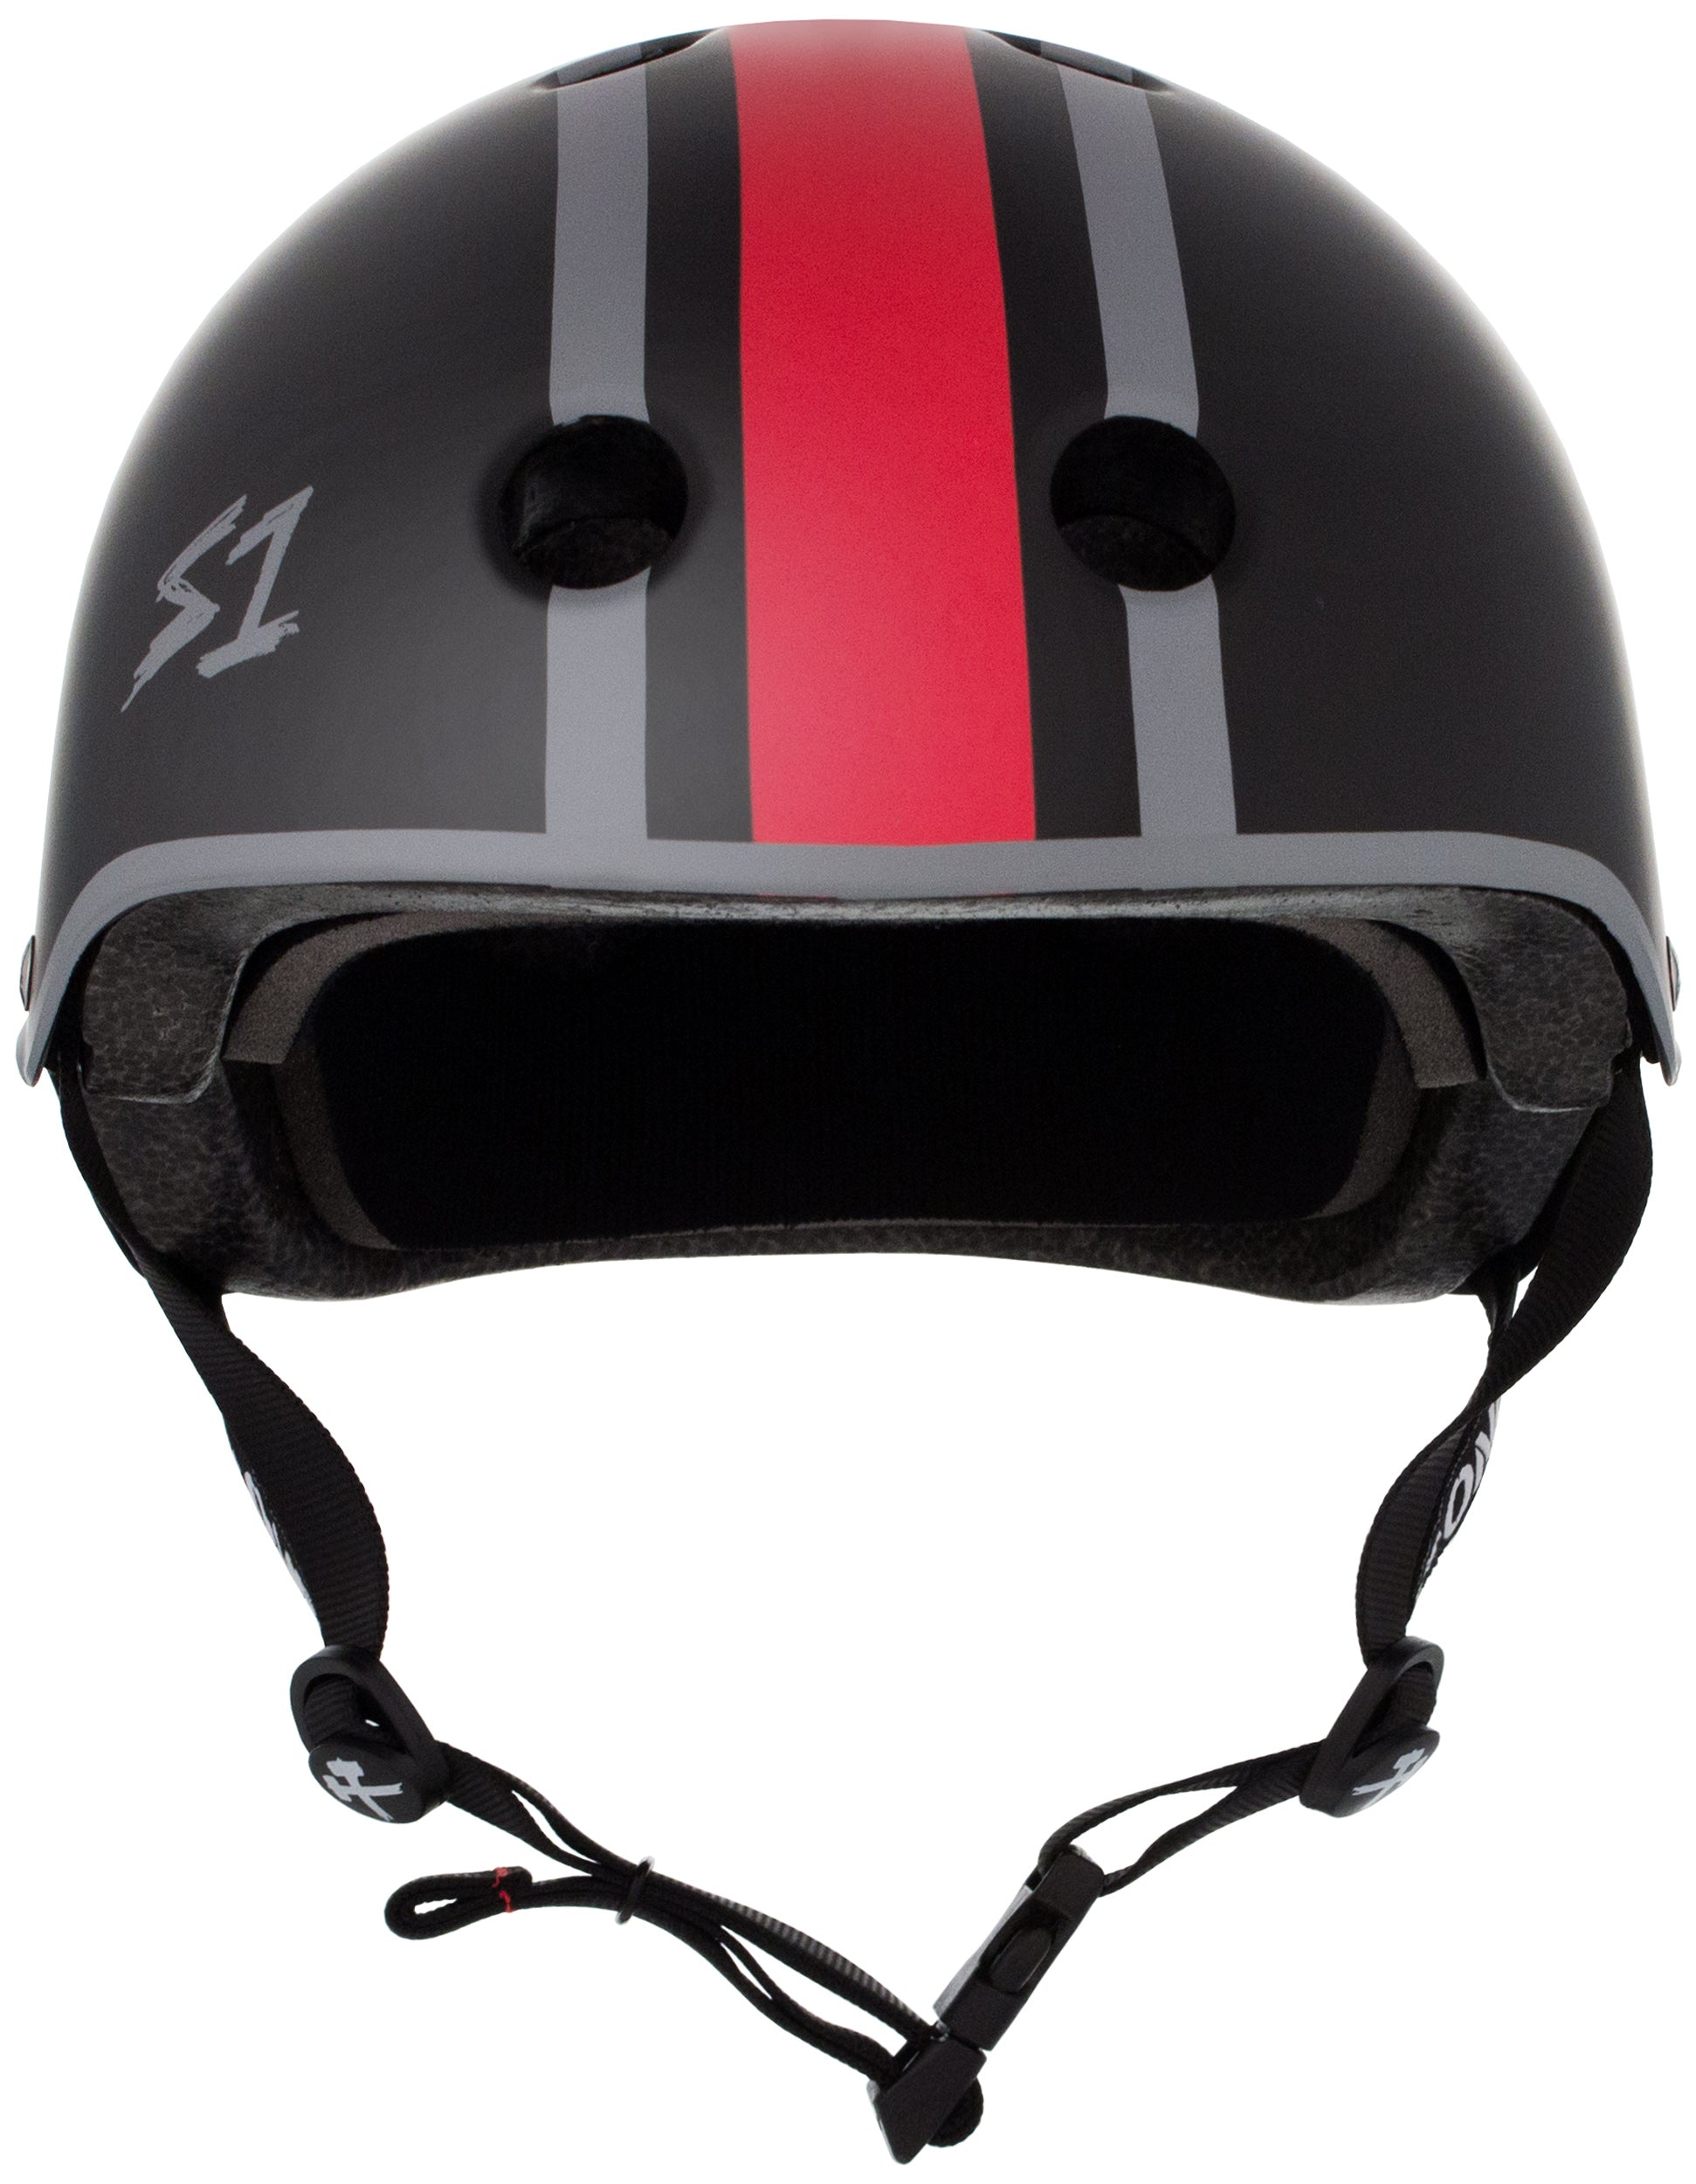 S1 Lifer Helmet - Casque Noir Eddie Elguera